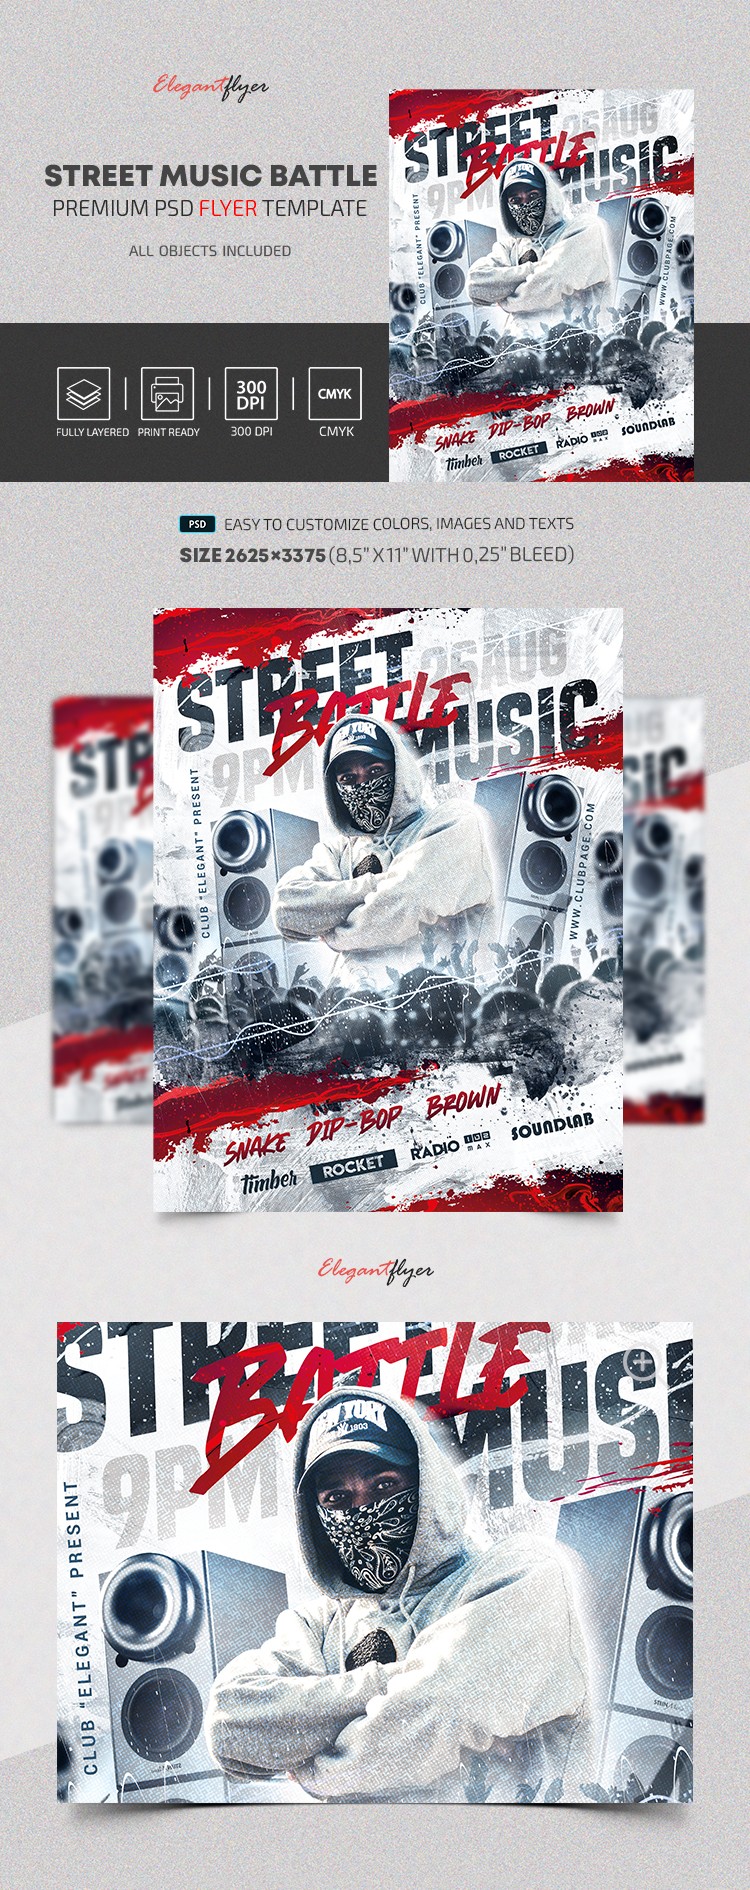 Street Music Battle Flyer by ElegantFlyer